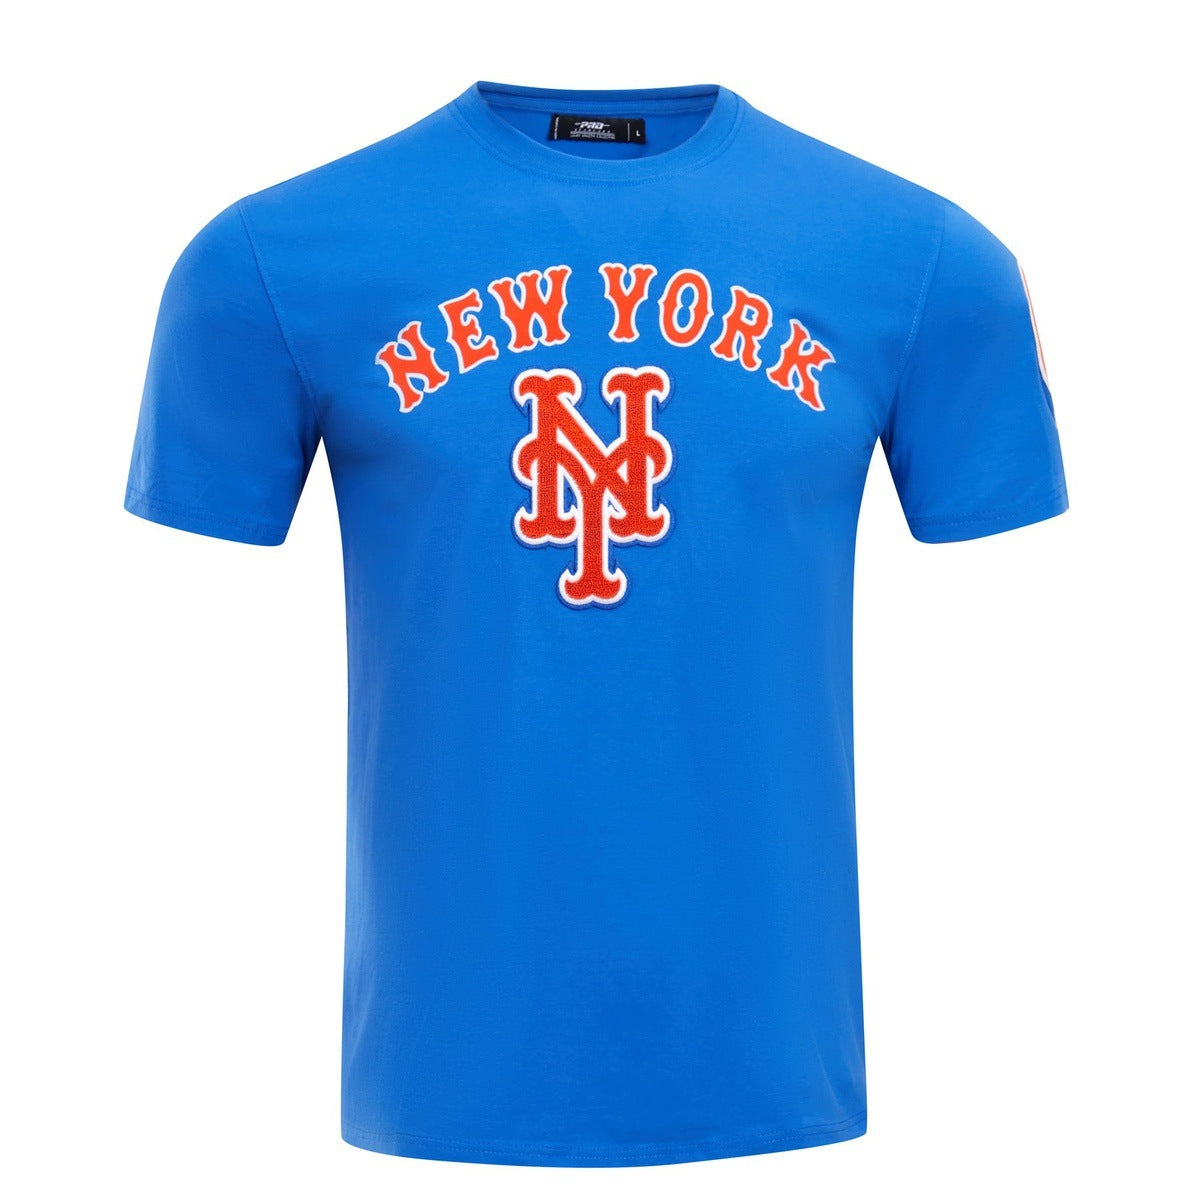 MLB NEW YORK METS CLASSIC BRISTLE MEN'S TOP (ROYAL BLUE)